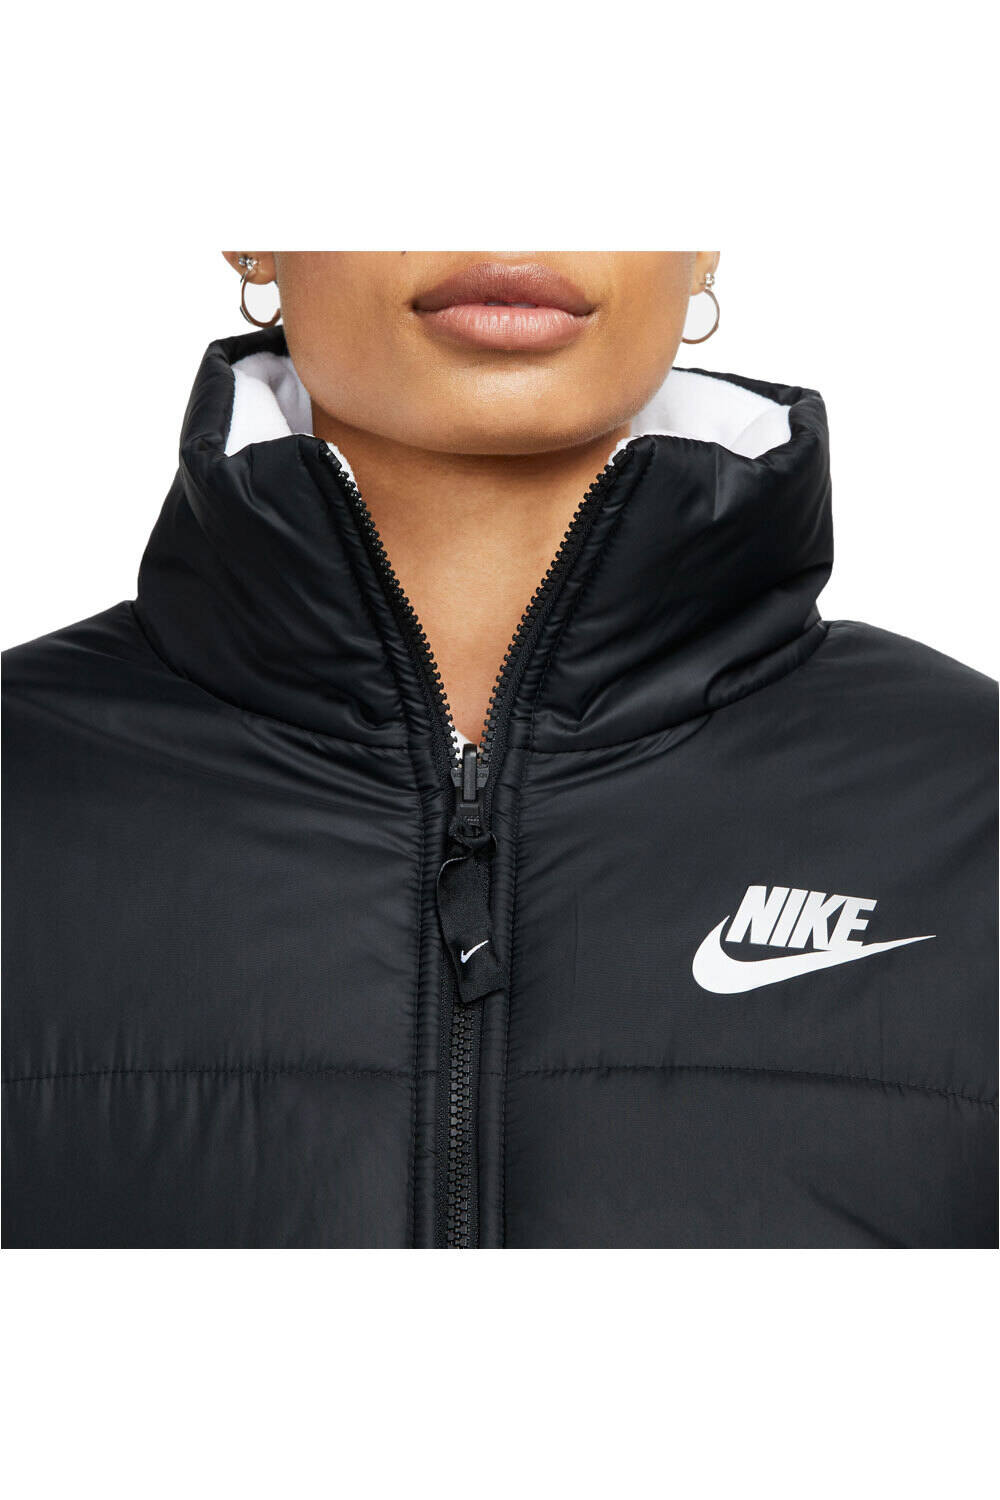 Nike chaquetas mujer NSW TF RPL CLSSC HD JKT vista detalle